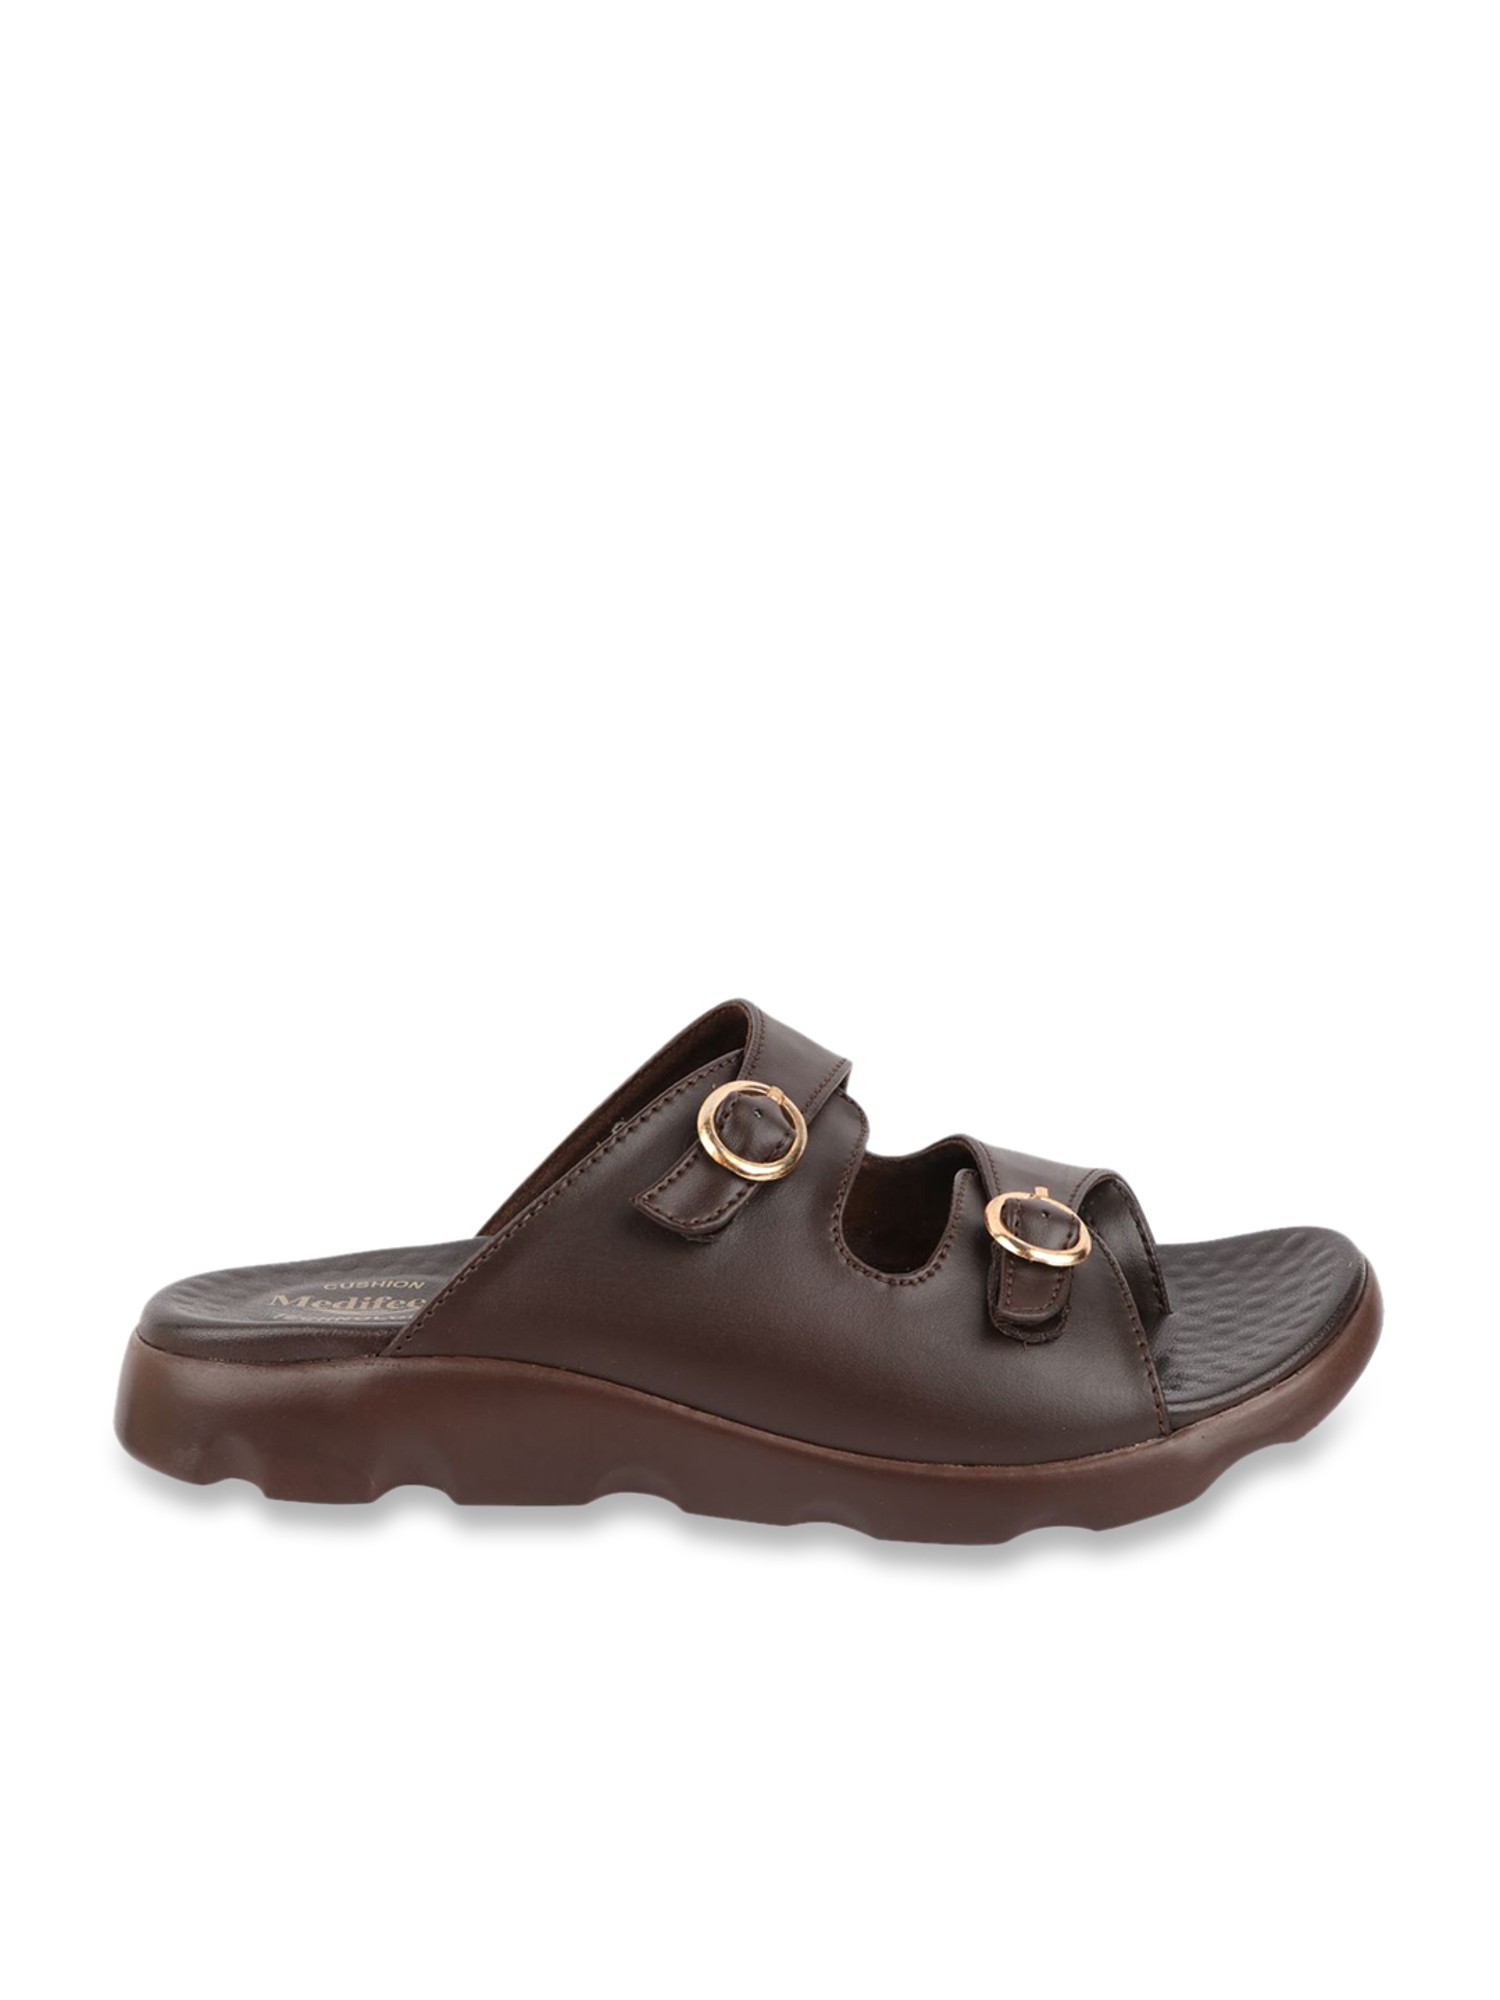 Dr Scholls Womens Originalist Brown Leather Slip On Slide Sandals Size 7  M  Social Ketchup